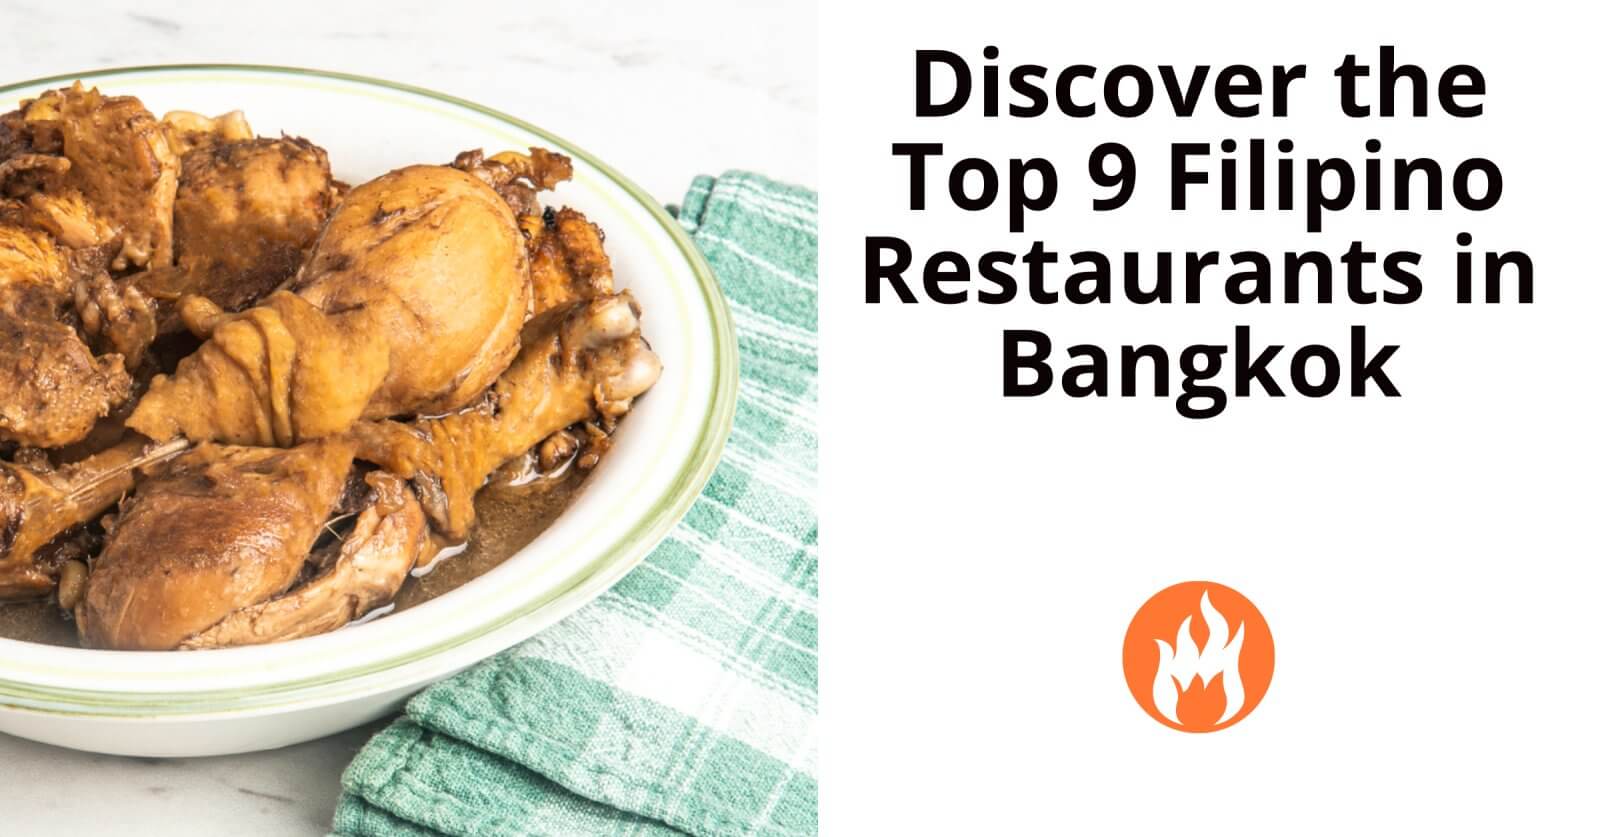 discover the top filipino restaurants in bangkok.